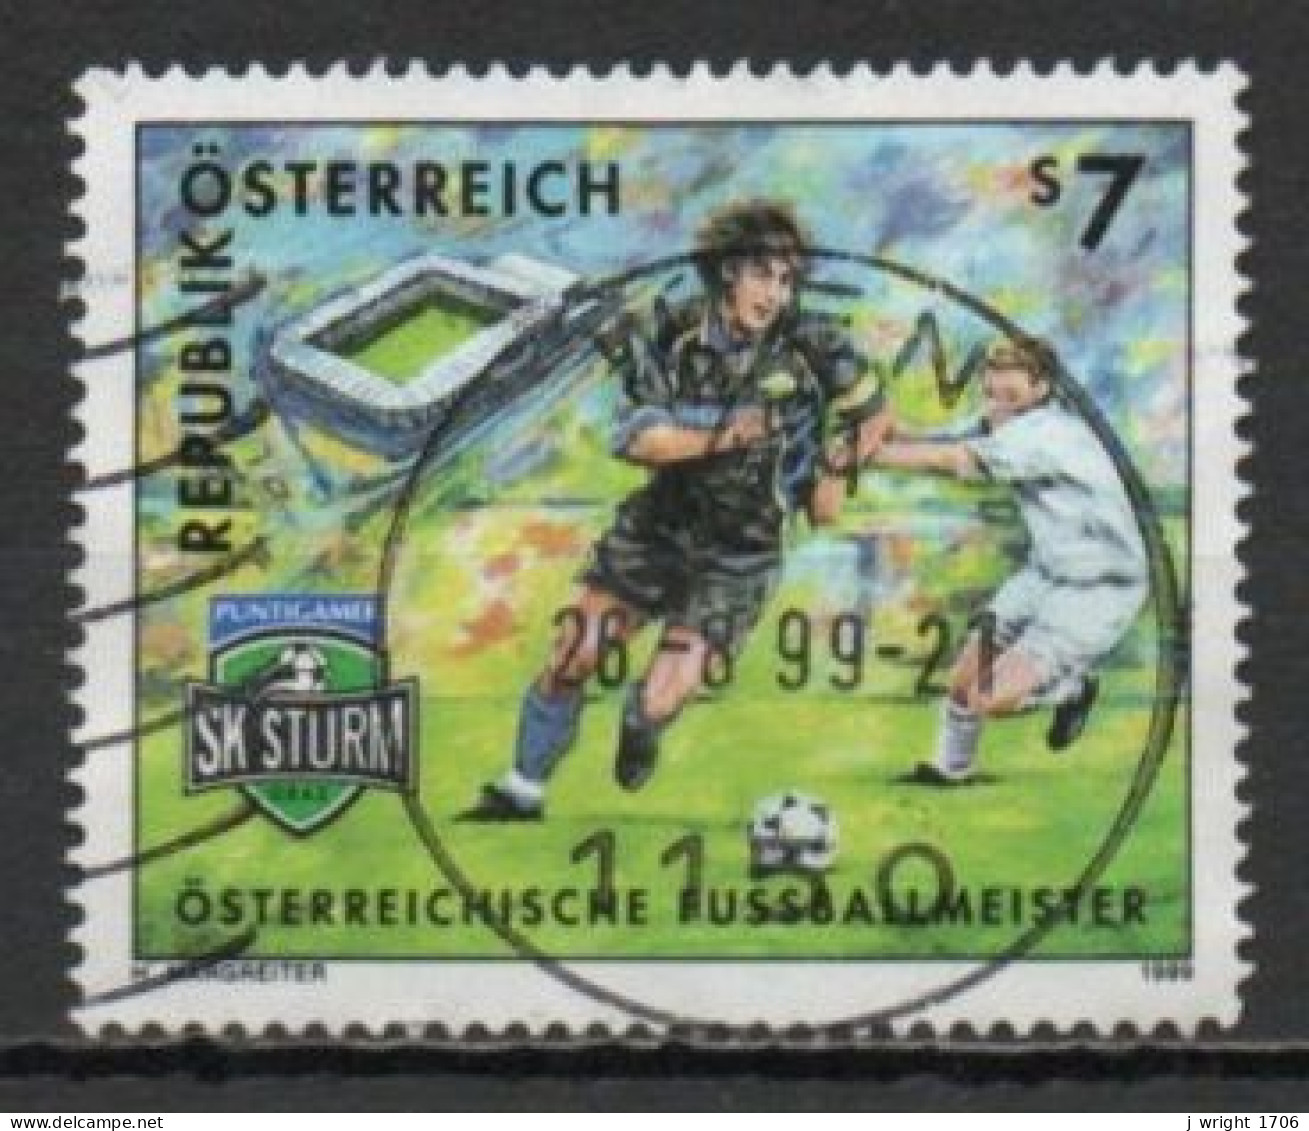 Austria, 1999, SK Puntigamer Sturm Graz Austrian Football Champions, 7s, USED - Oblitérés